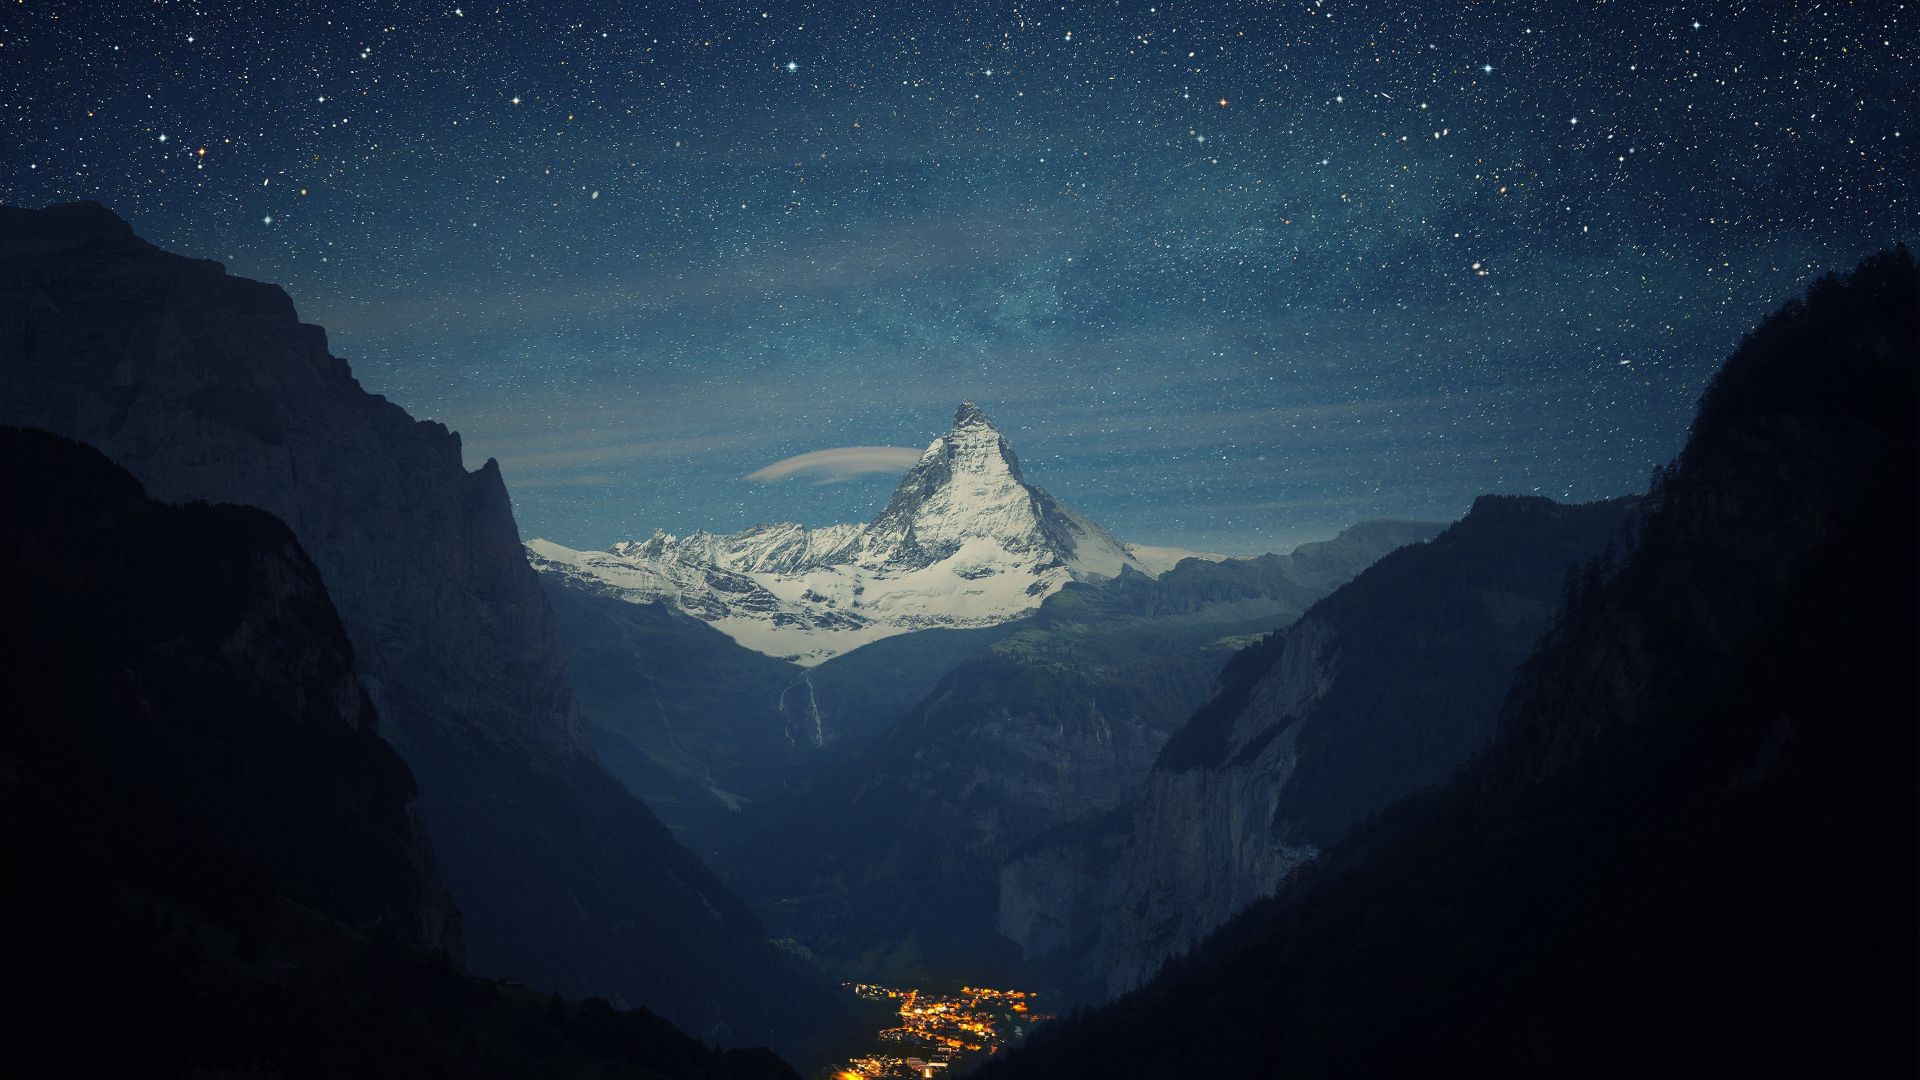 Швейцария, 4k, 5k, Альпы, горы, звезды, ночь, Switzerland, 4k, 5k wallpaper, Alps, mountains, stars, night (horizontal)